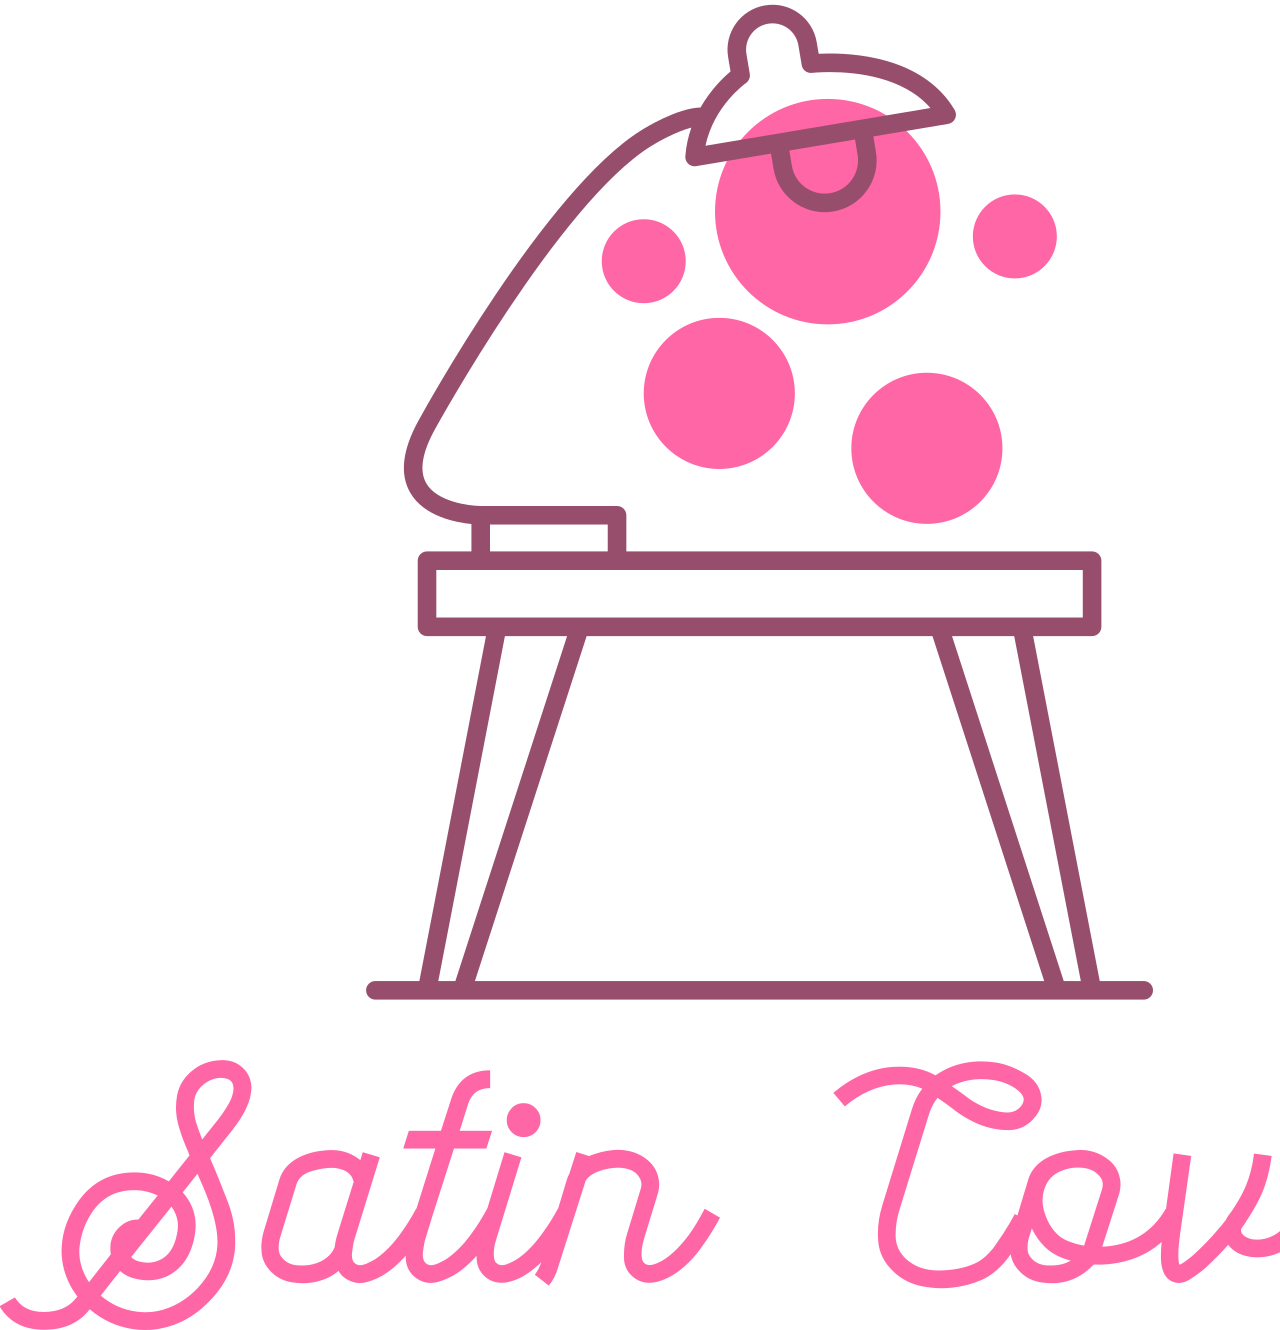 Satin Cove's web page